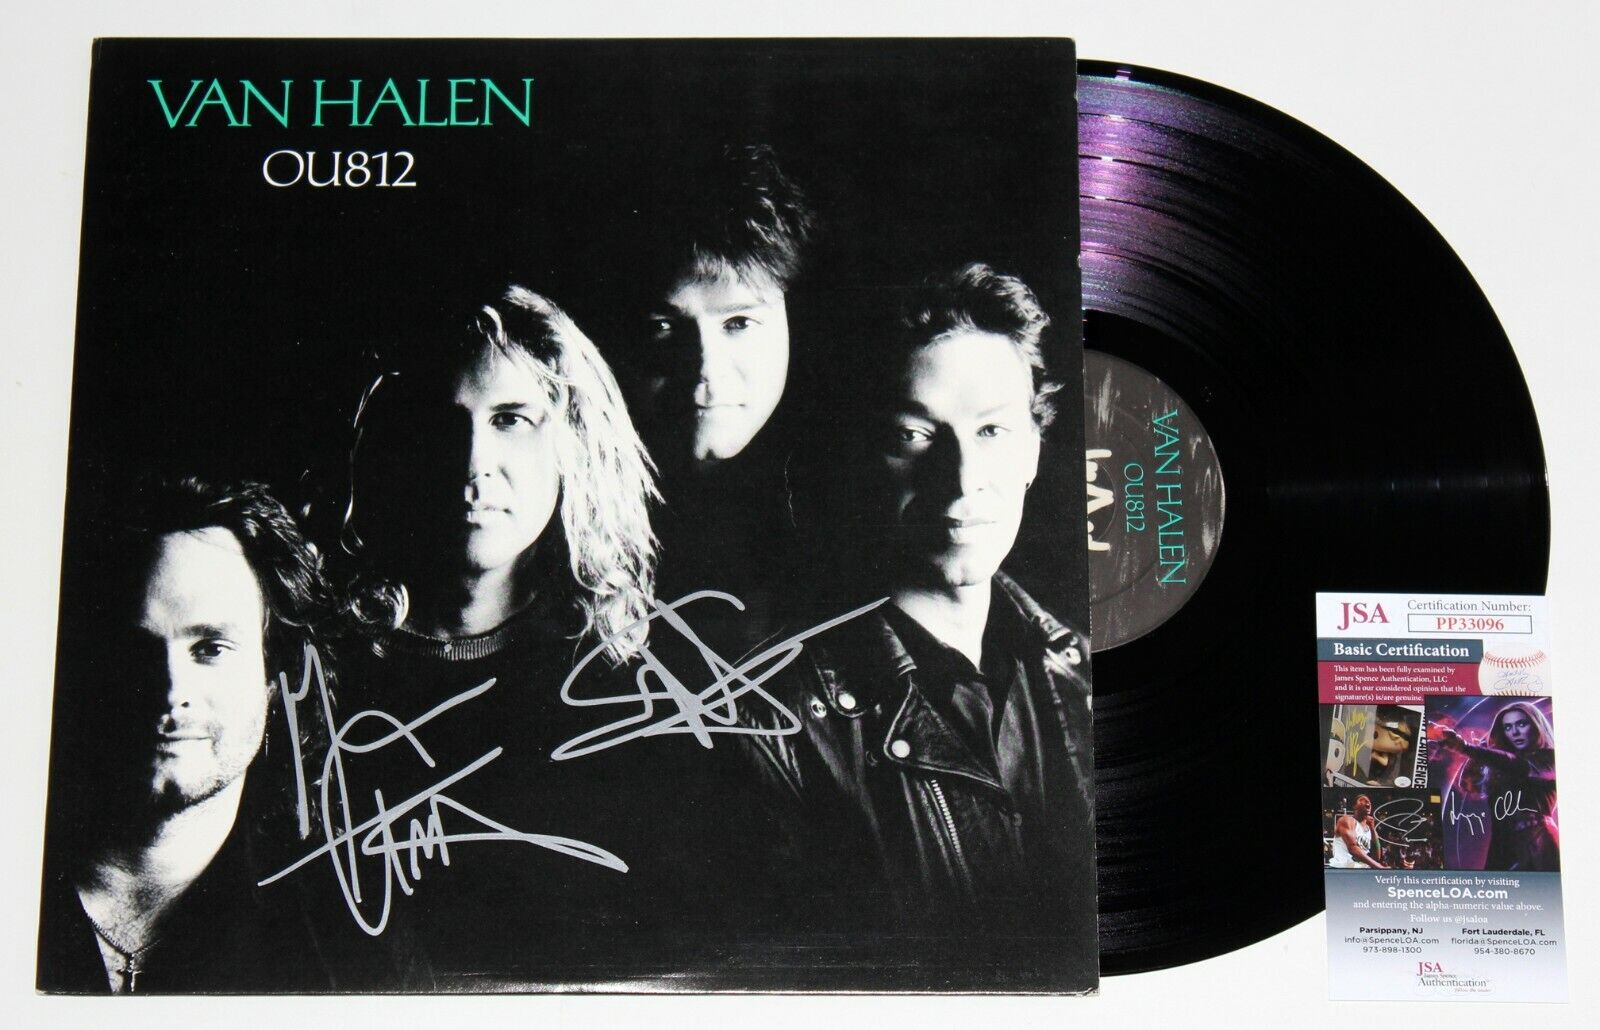 VAN HALEN SIGNED OU812 LP VINYL RECORD ALBUM SAMMY HAGAR MICHAEL ANTHONY JSA COA